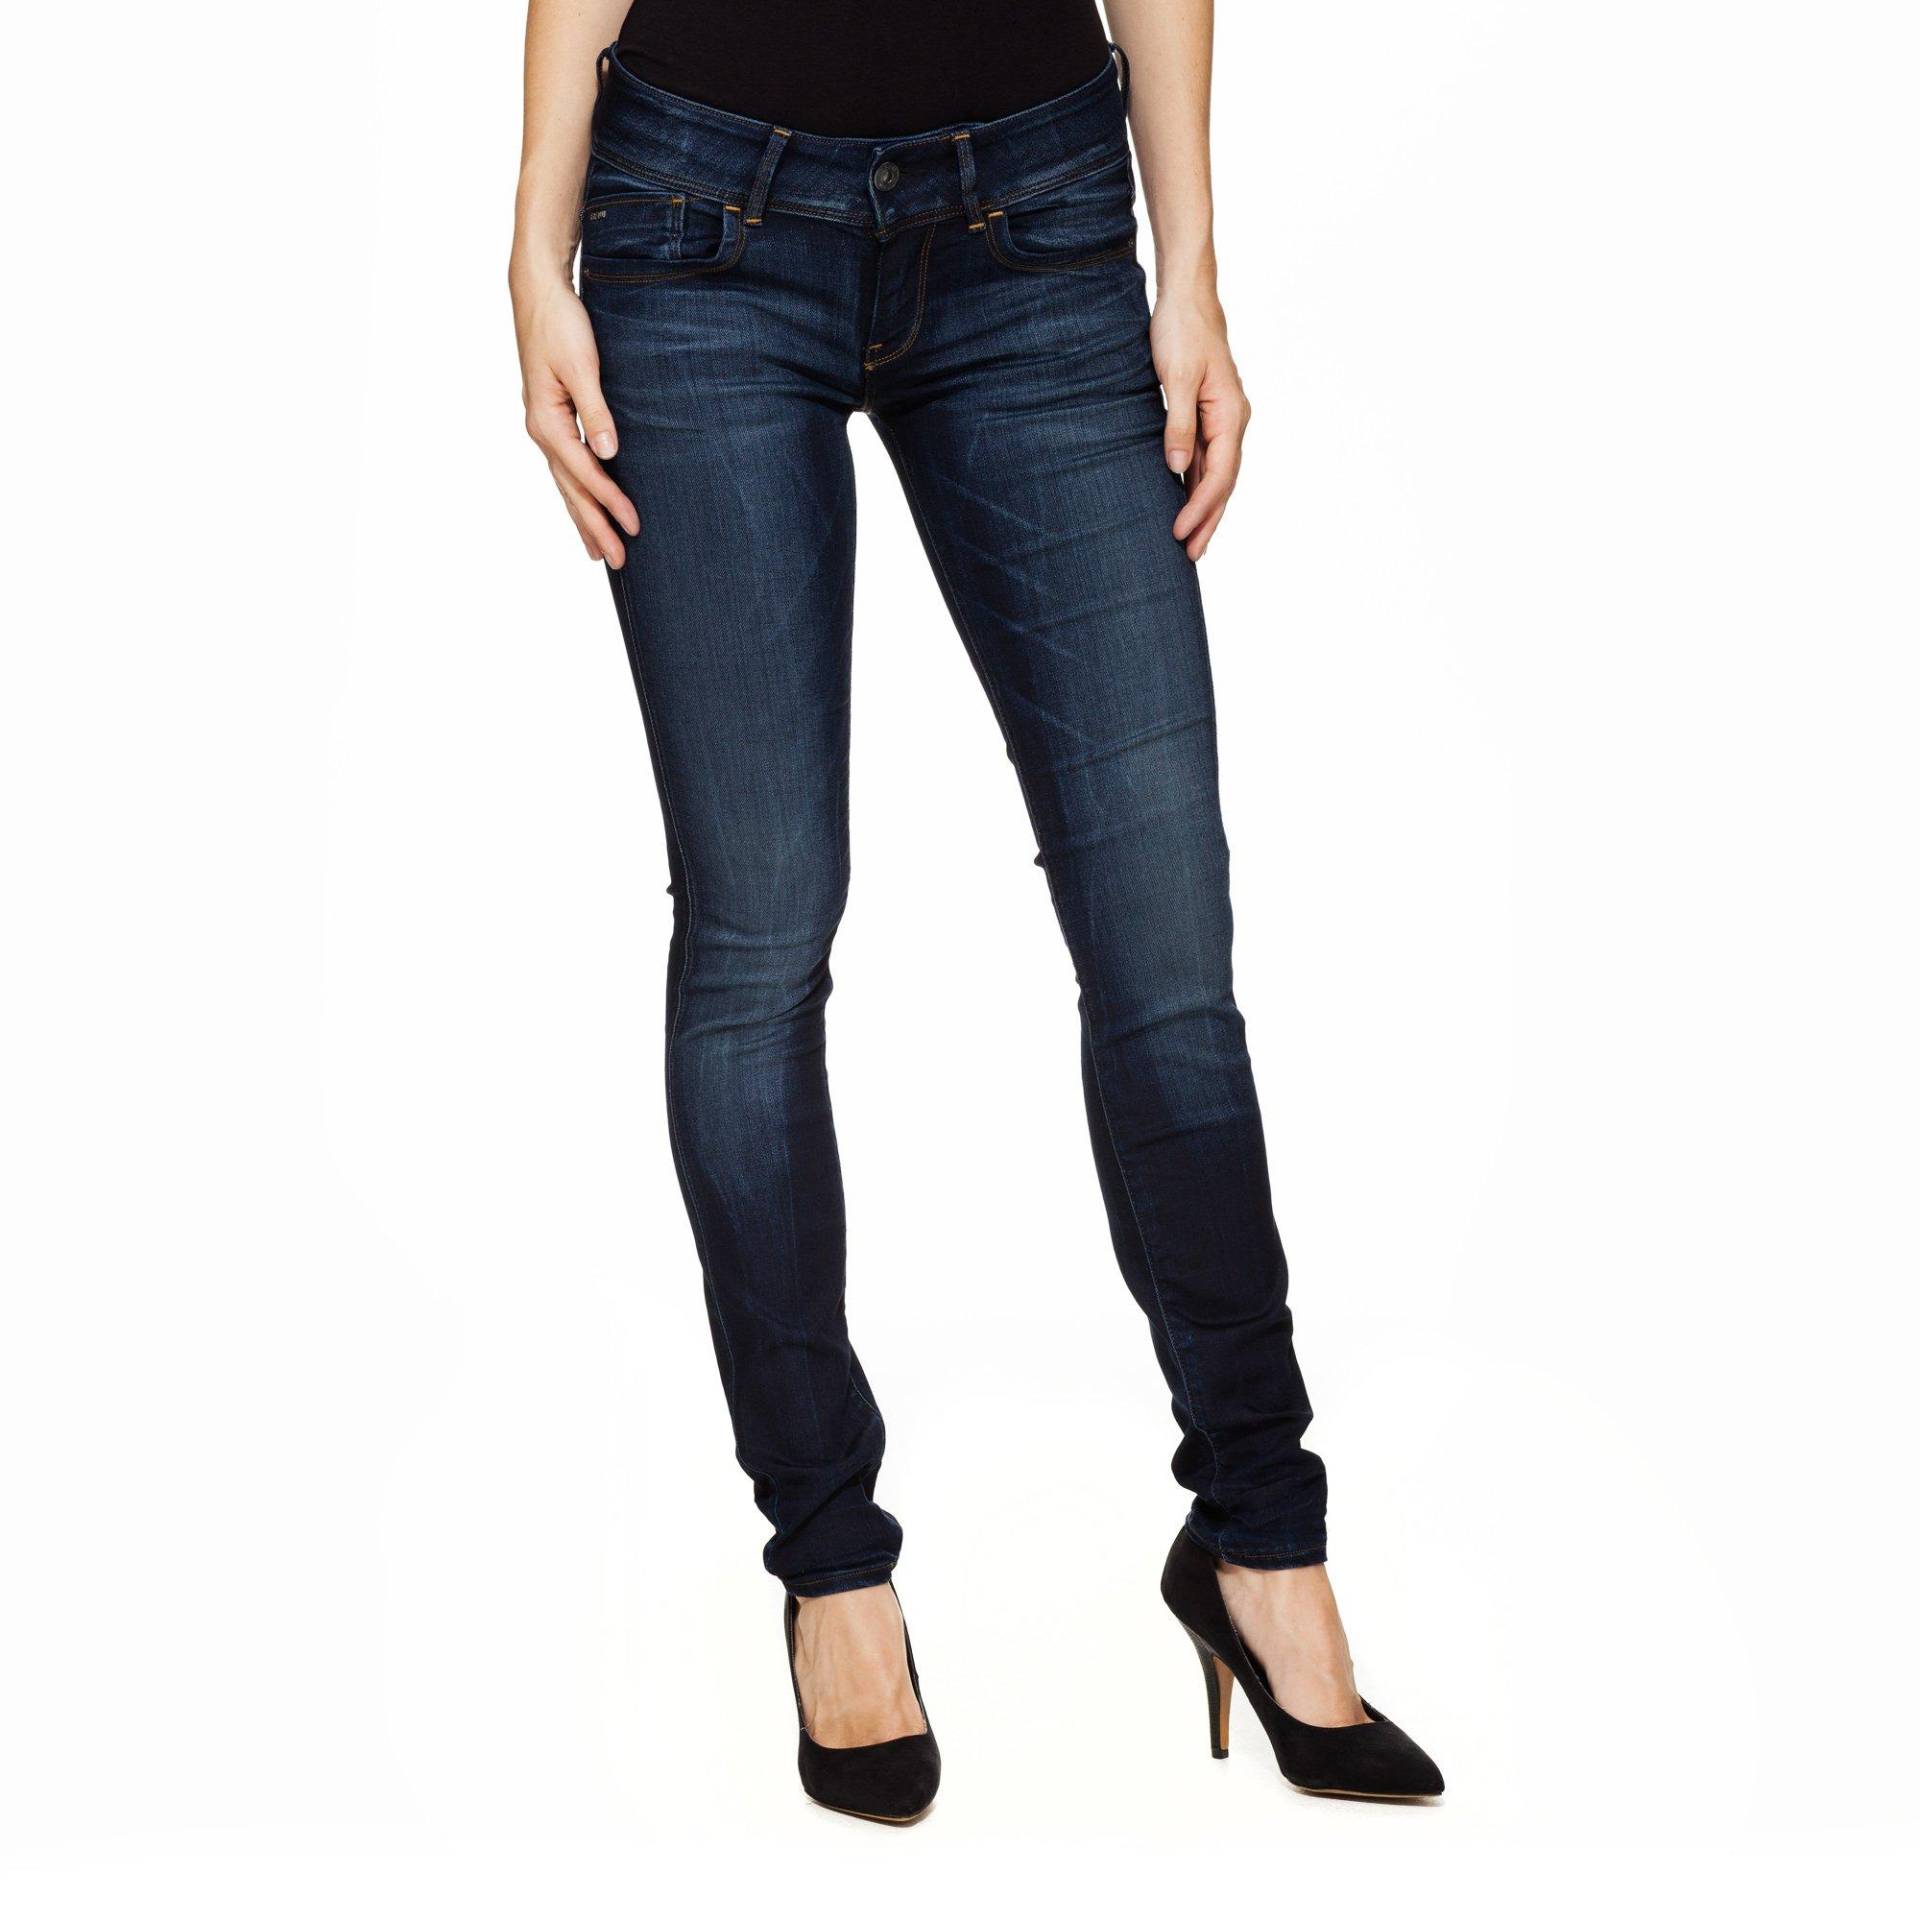 Jeans, Skinny Fit Damen Blau Denim W32 von G-STAR